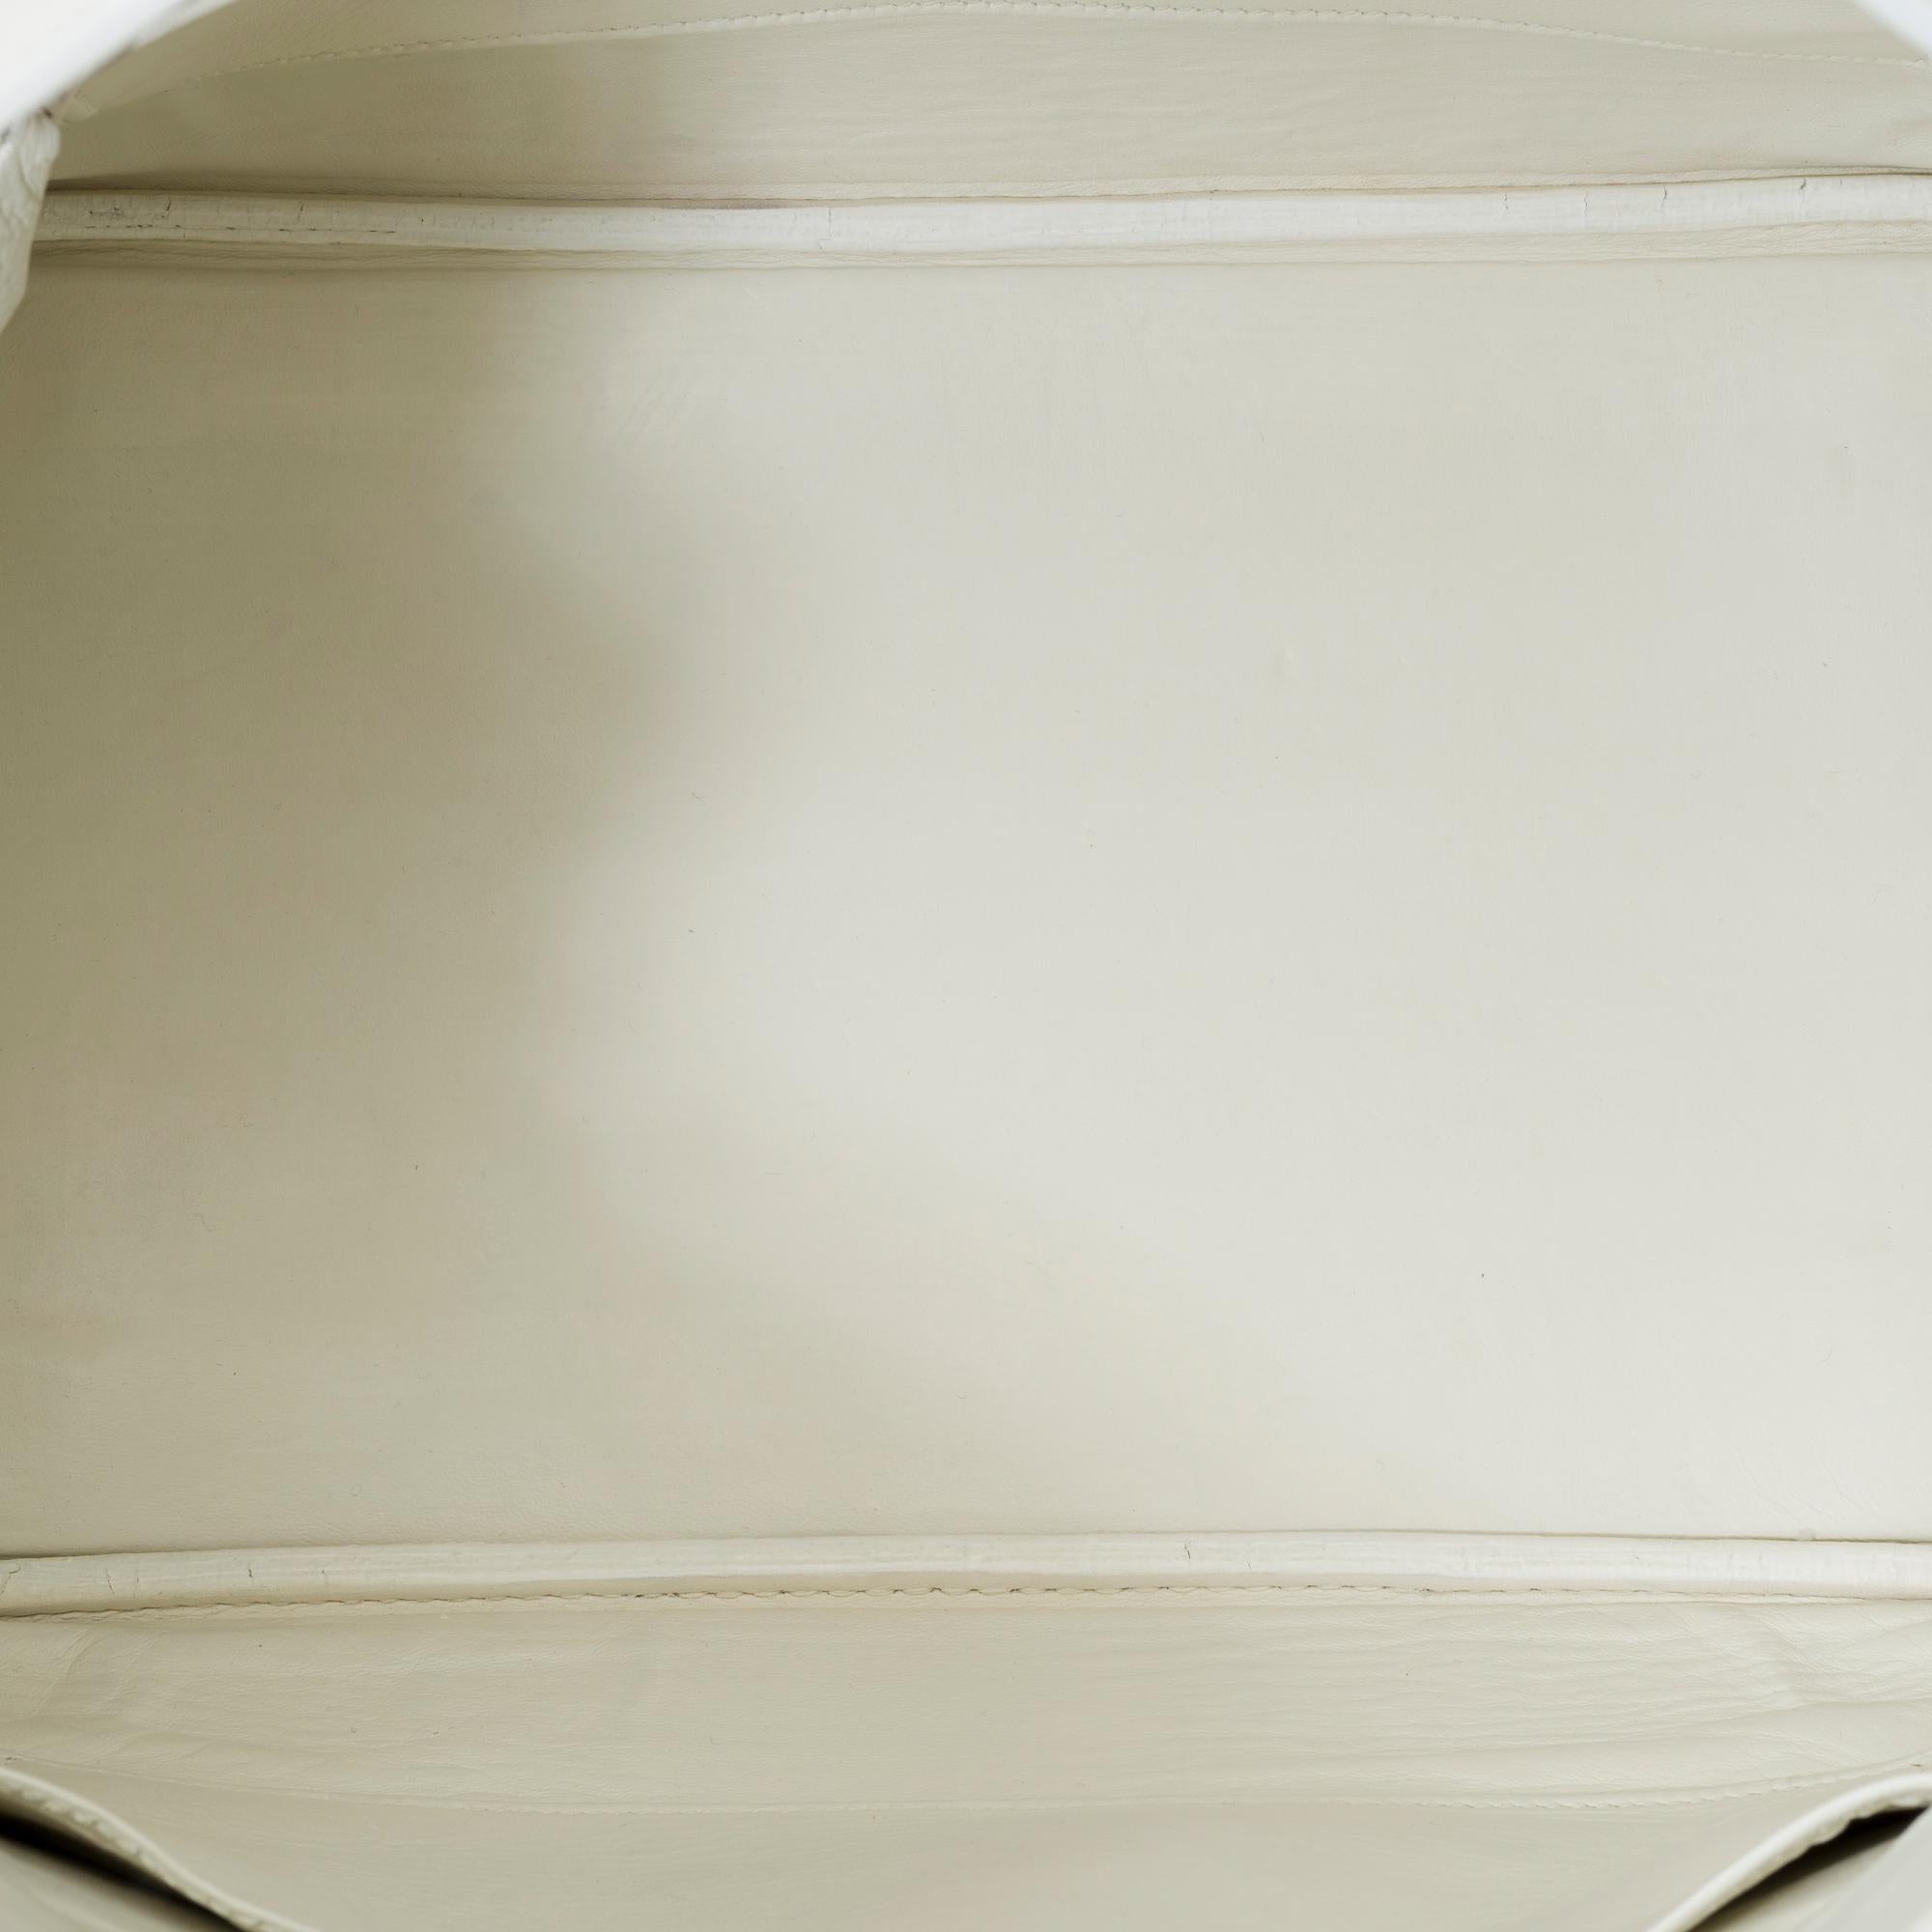 Stunning Hermès Birkin 35 handbag in White Taurillon Clemence leather, SHW 5